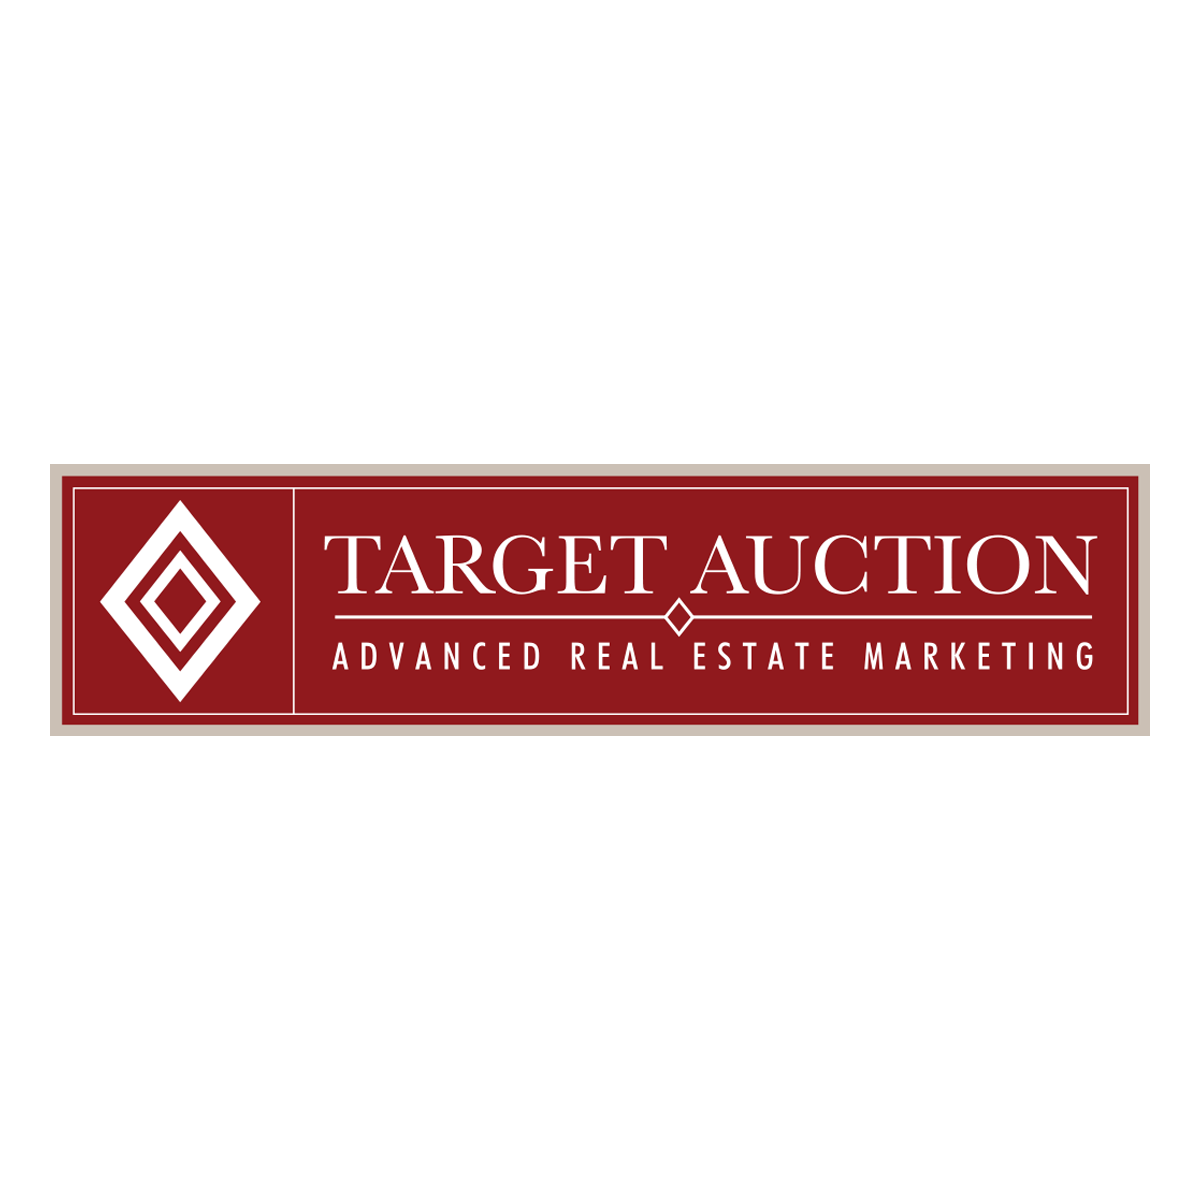 Target Auction